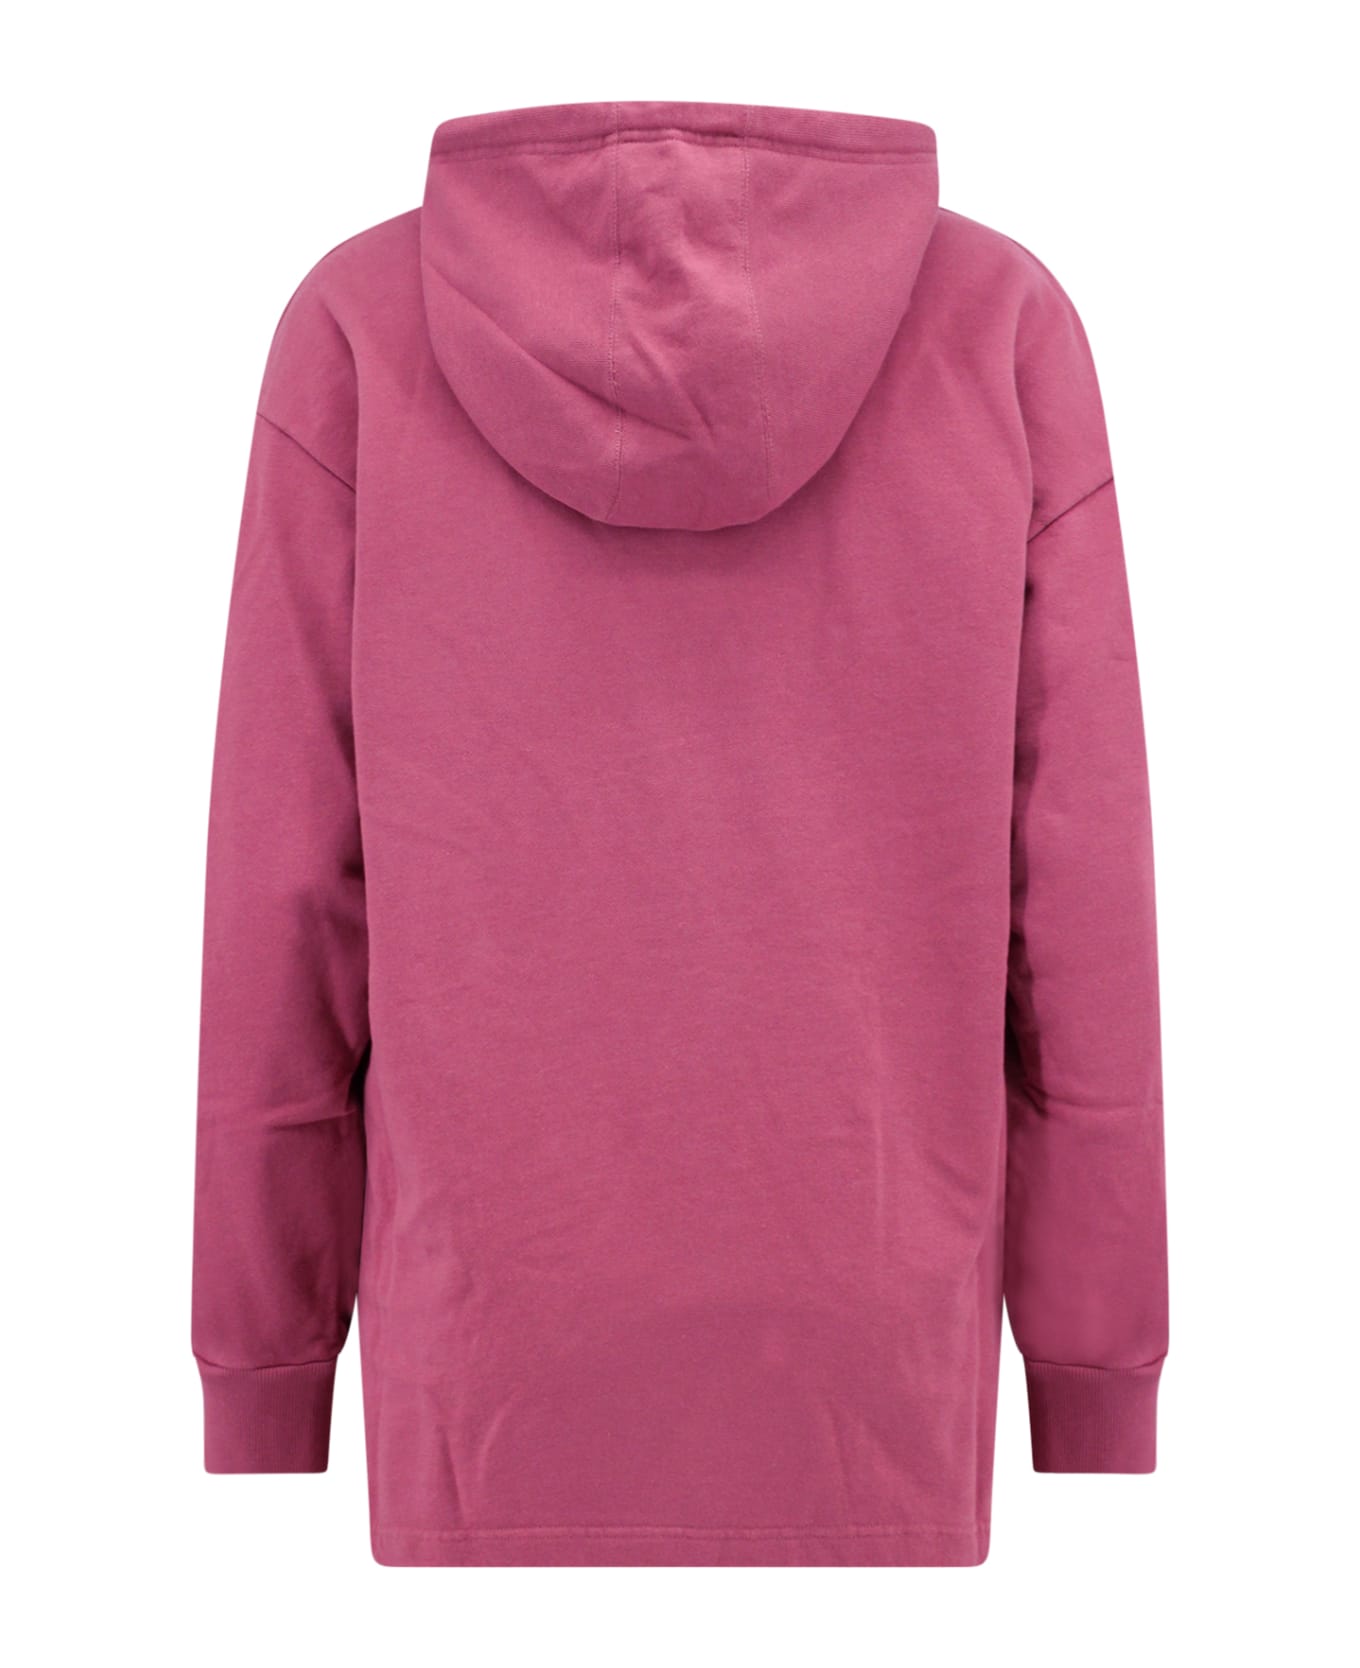 Marant Étoile Sweatshirt - Pink